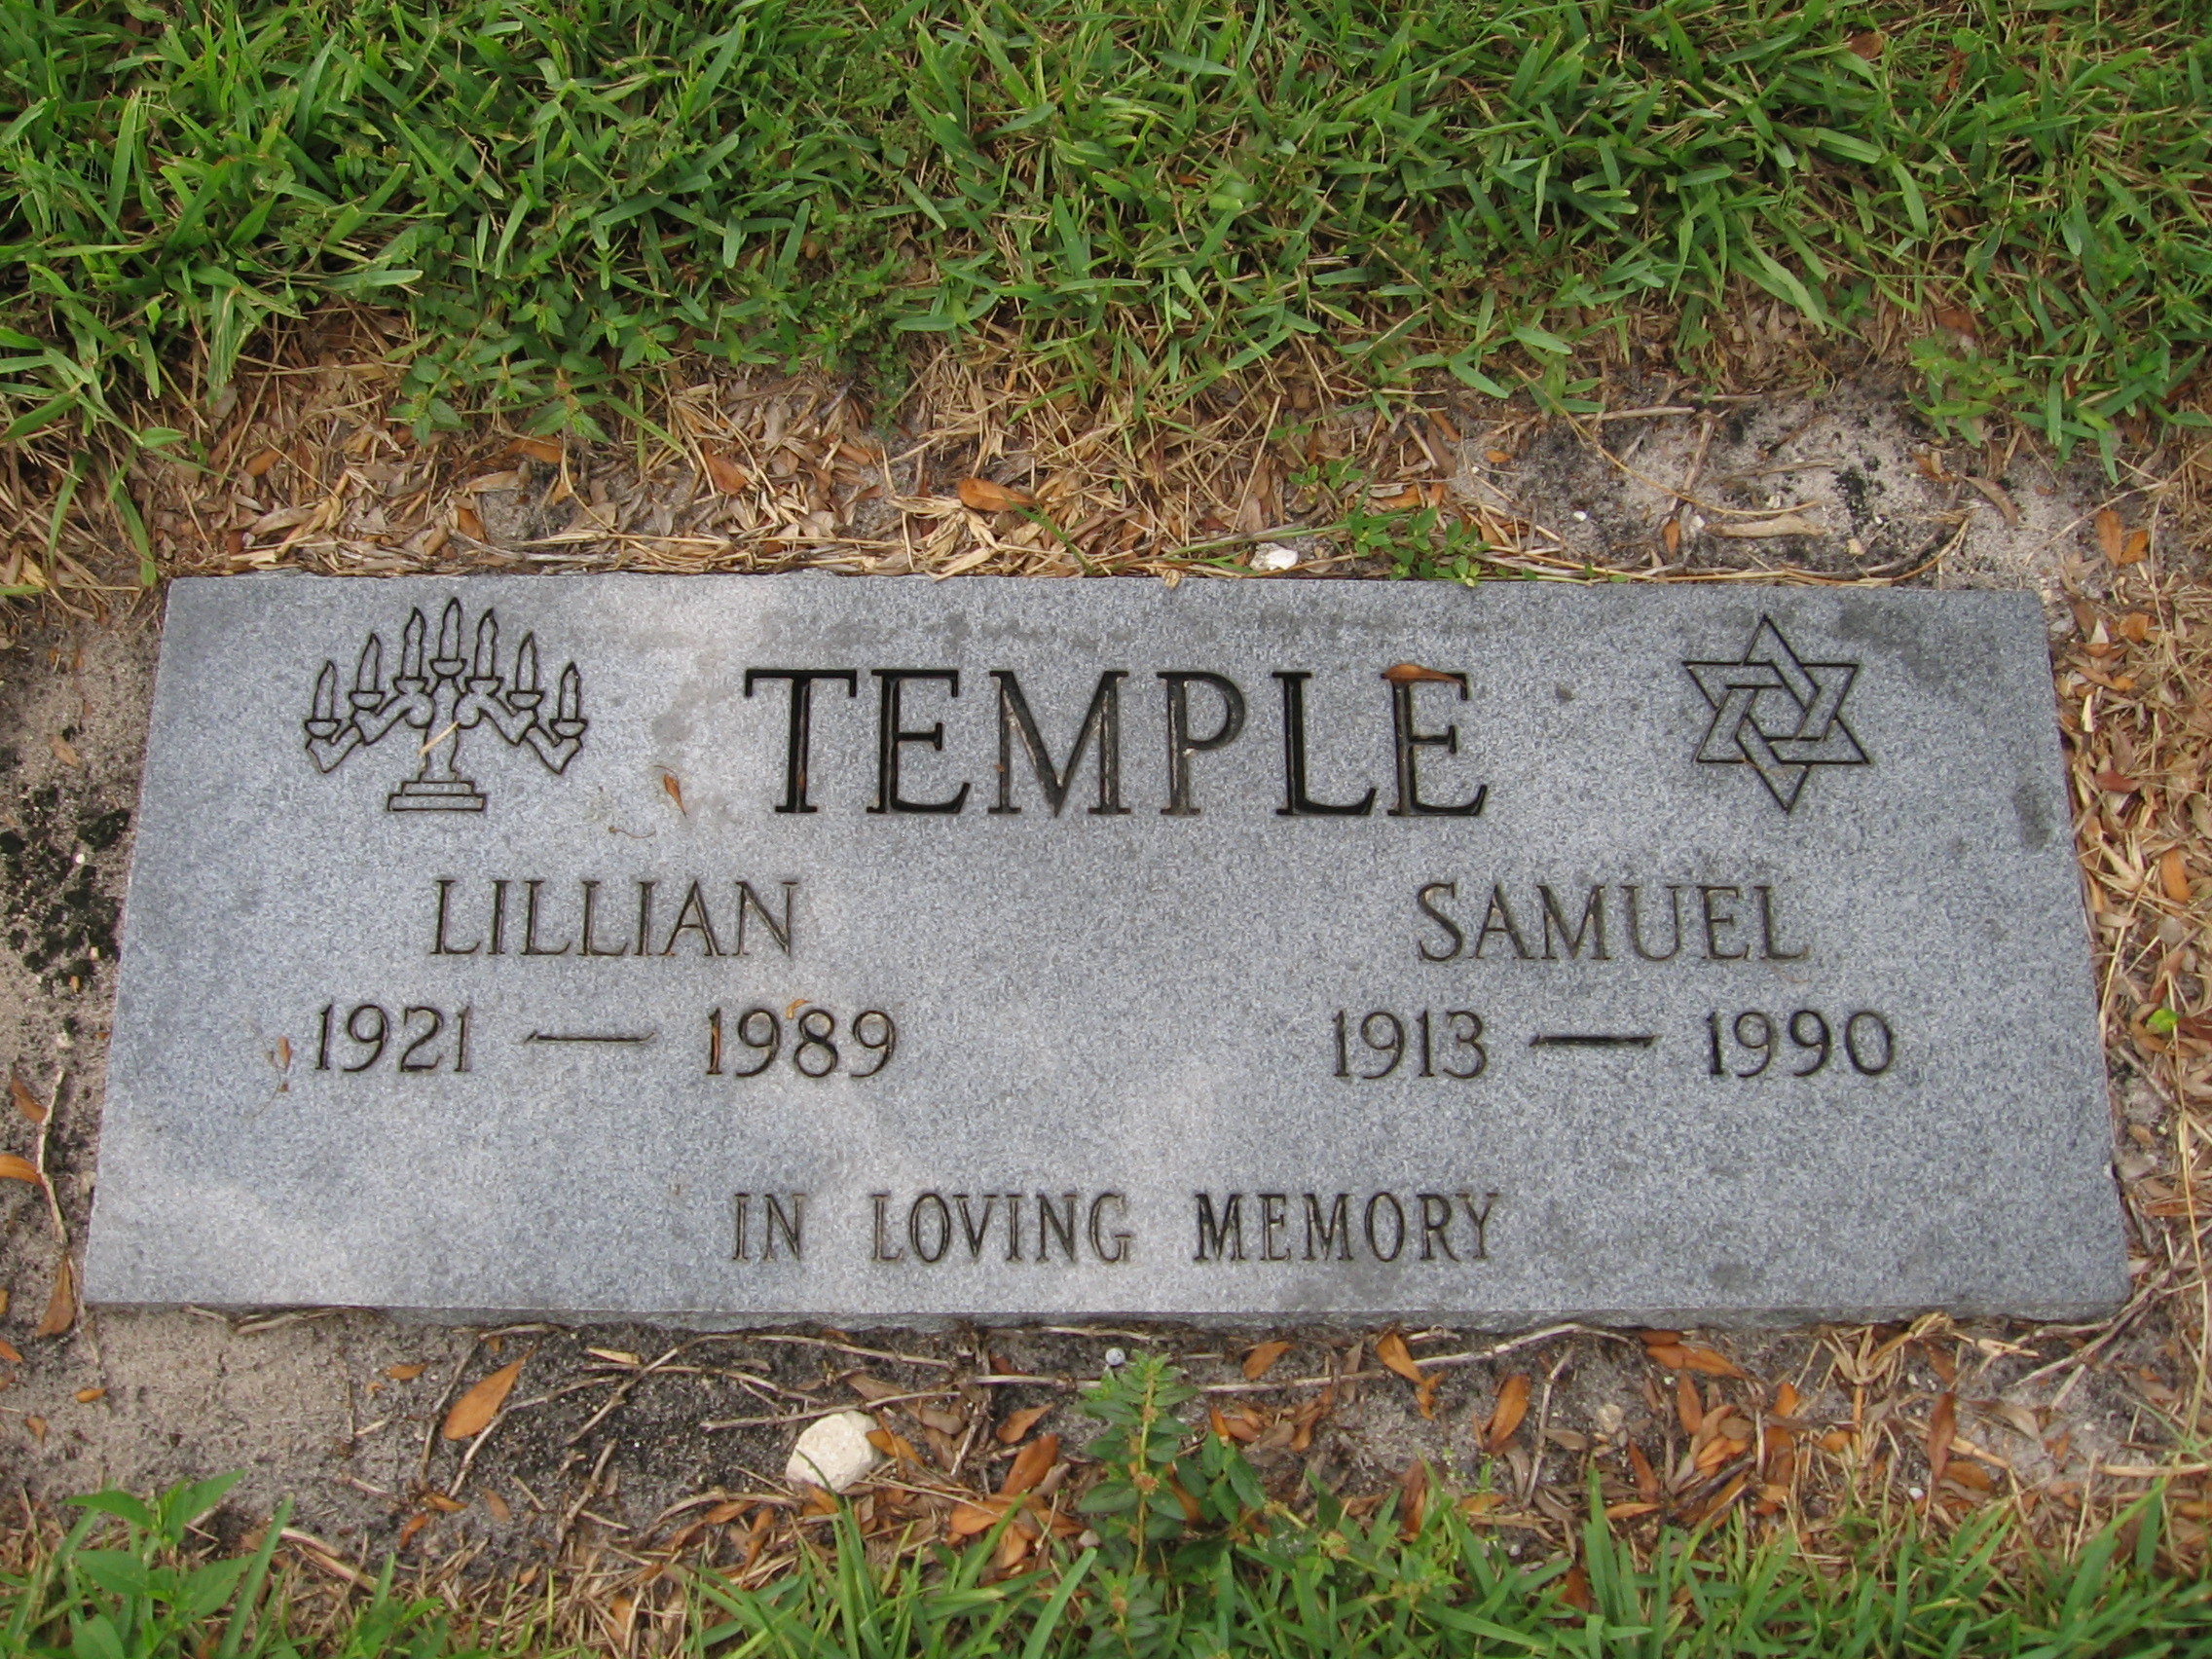 Lillian Temple